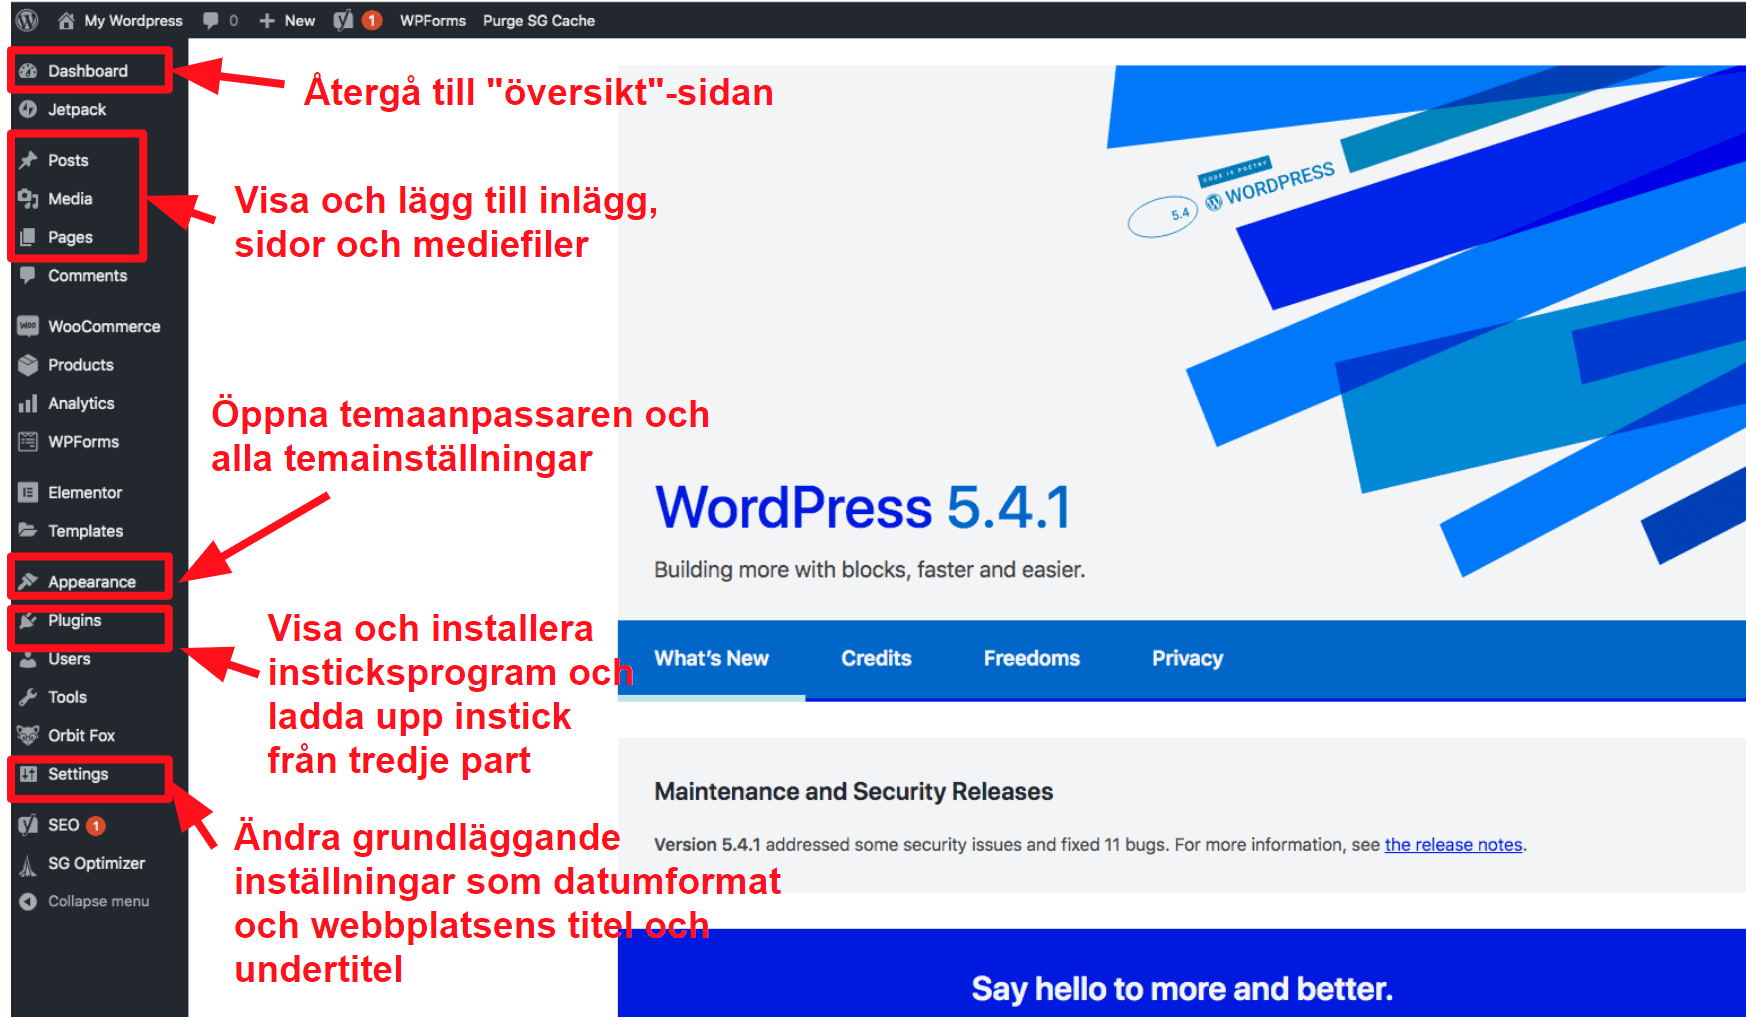 The WordPress dashboard SV16